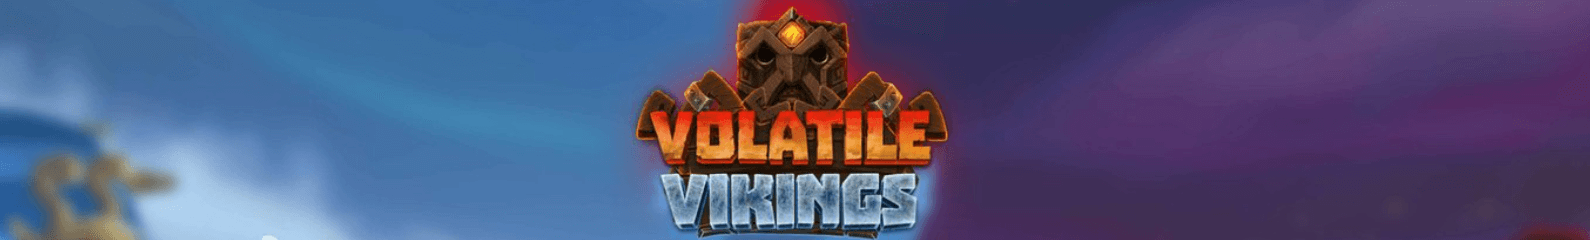 Volatile Vikings 